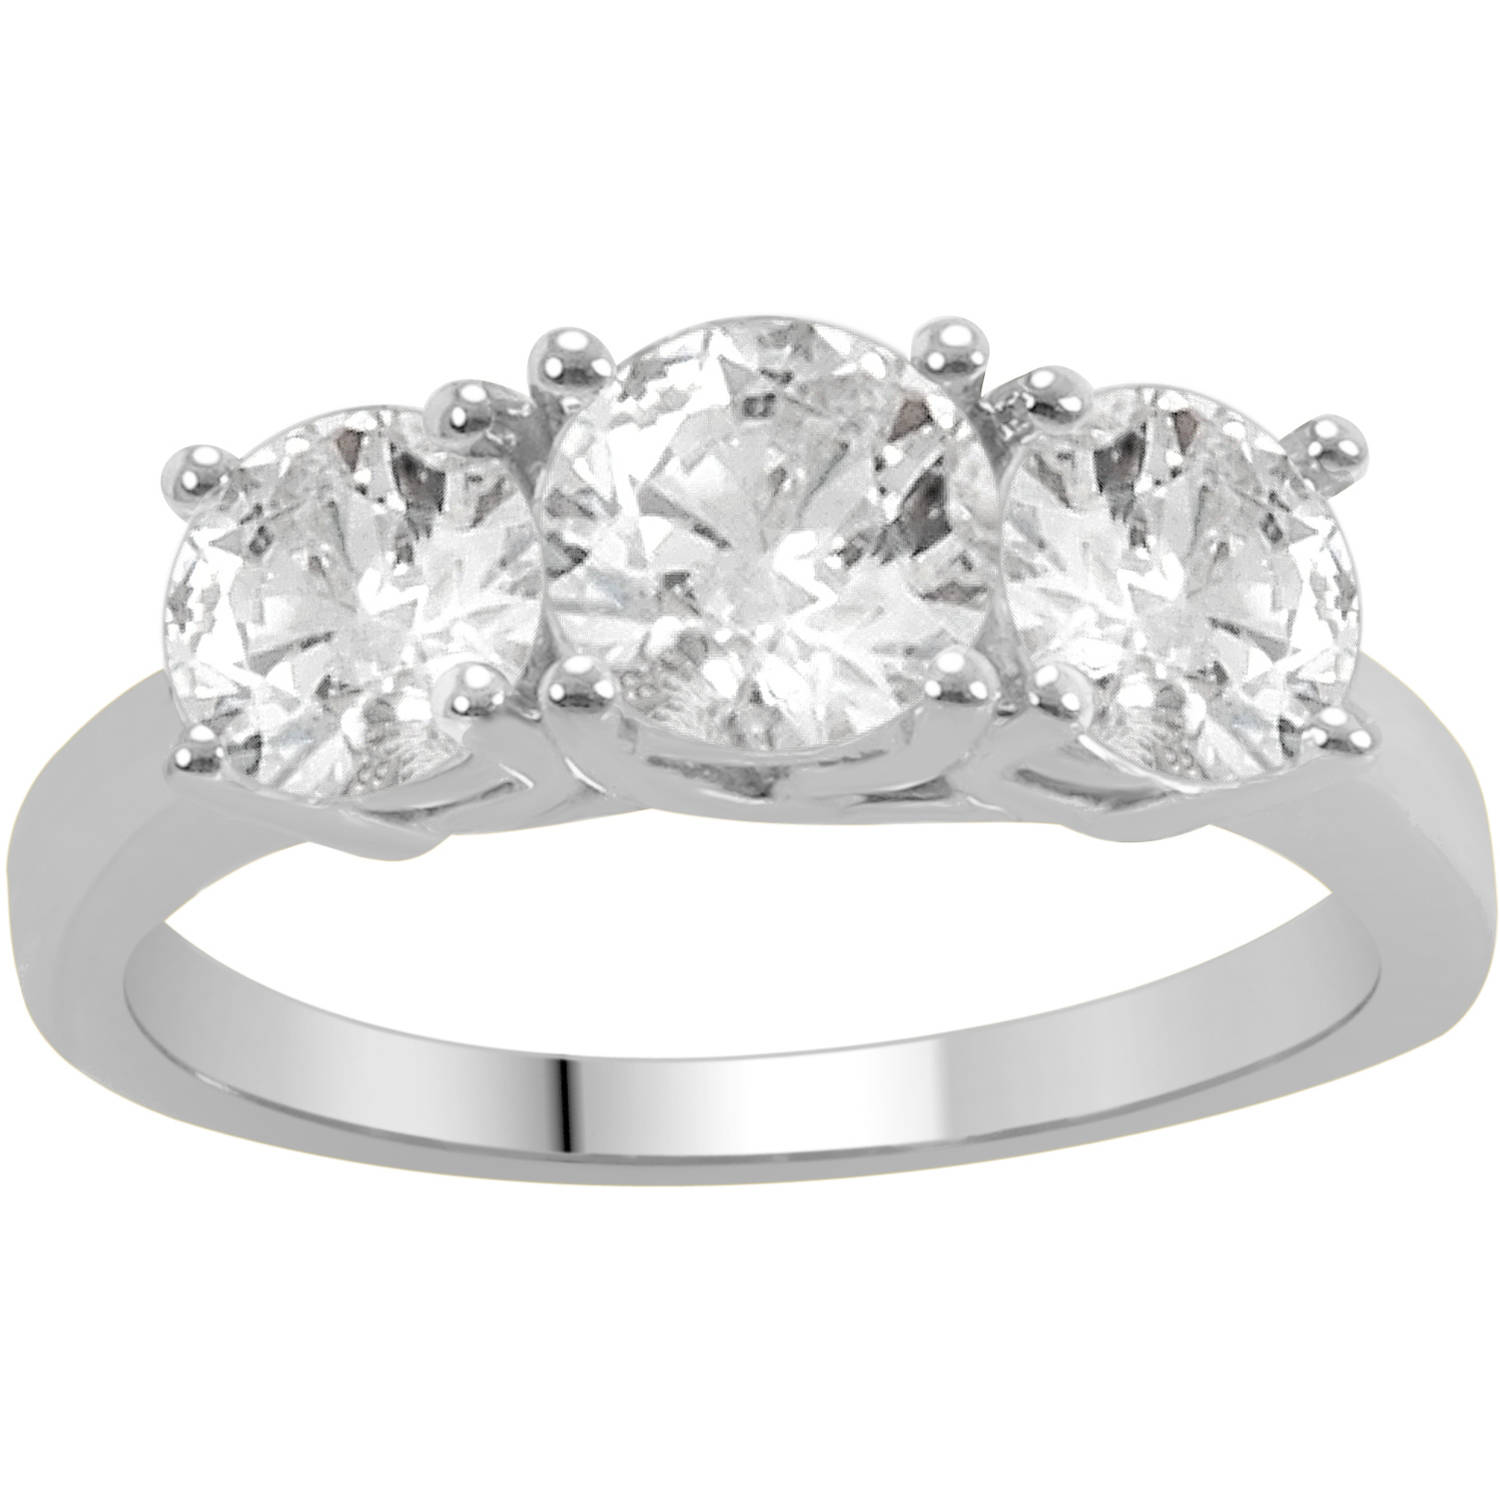 Arista 2 ct Round Cut White Diamond 3-Stone Ring 14K White Gold (H-I, I2-I3) - image 2 of 6